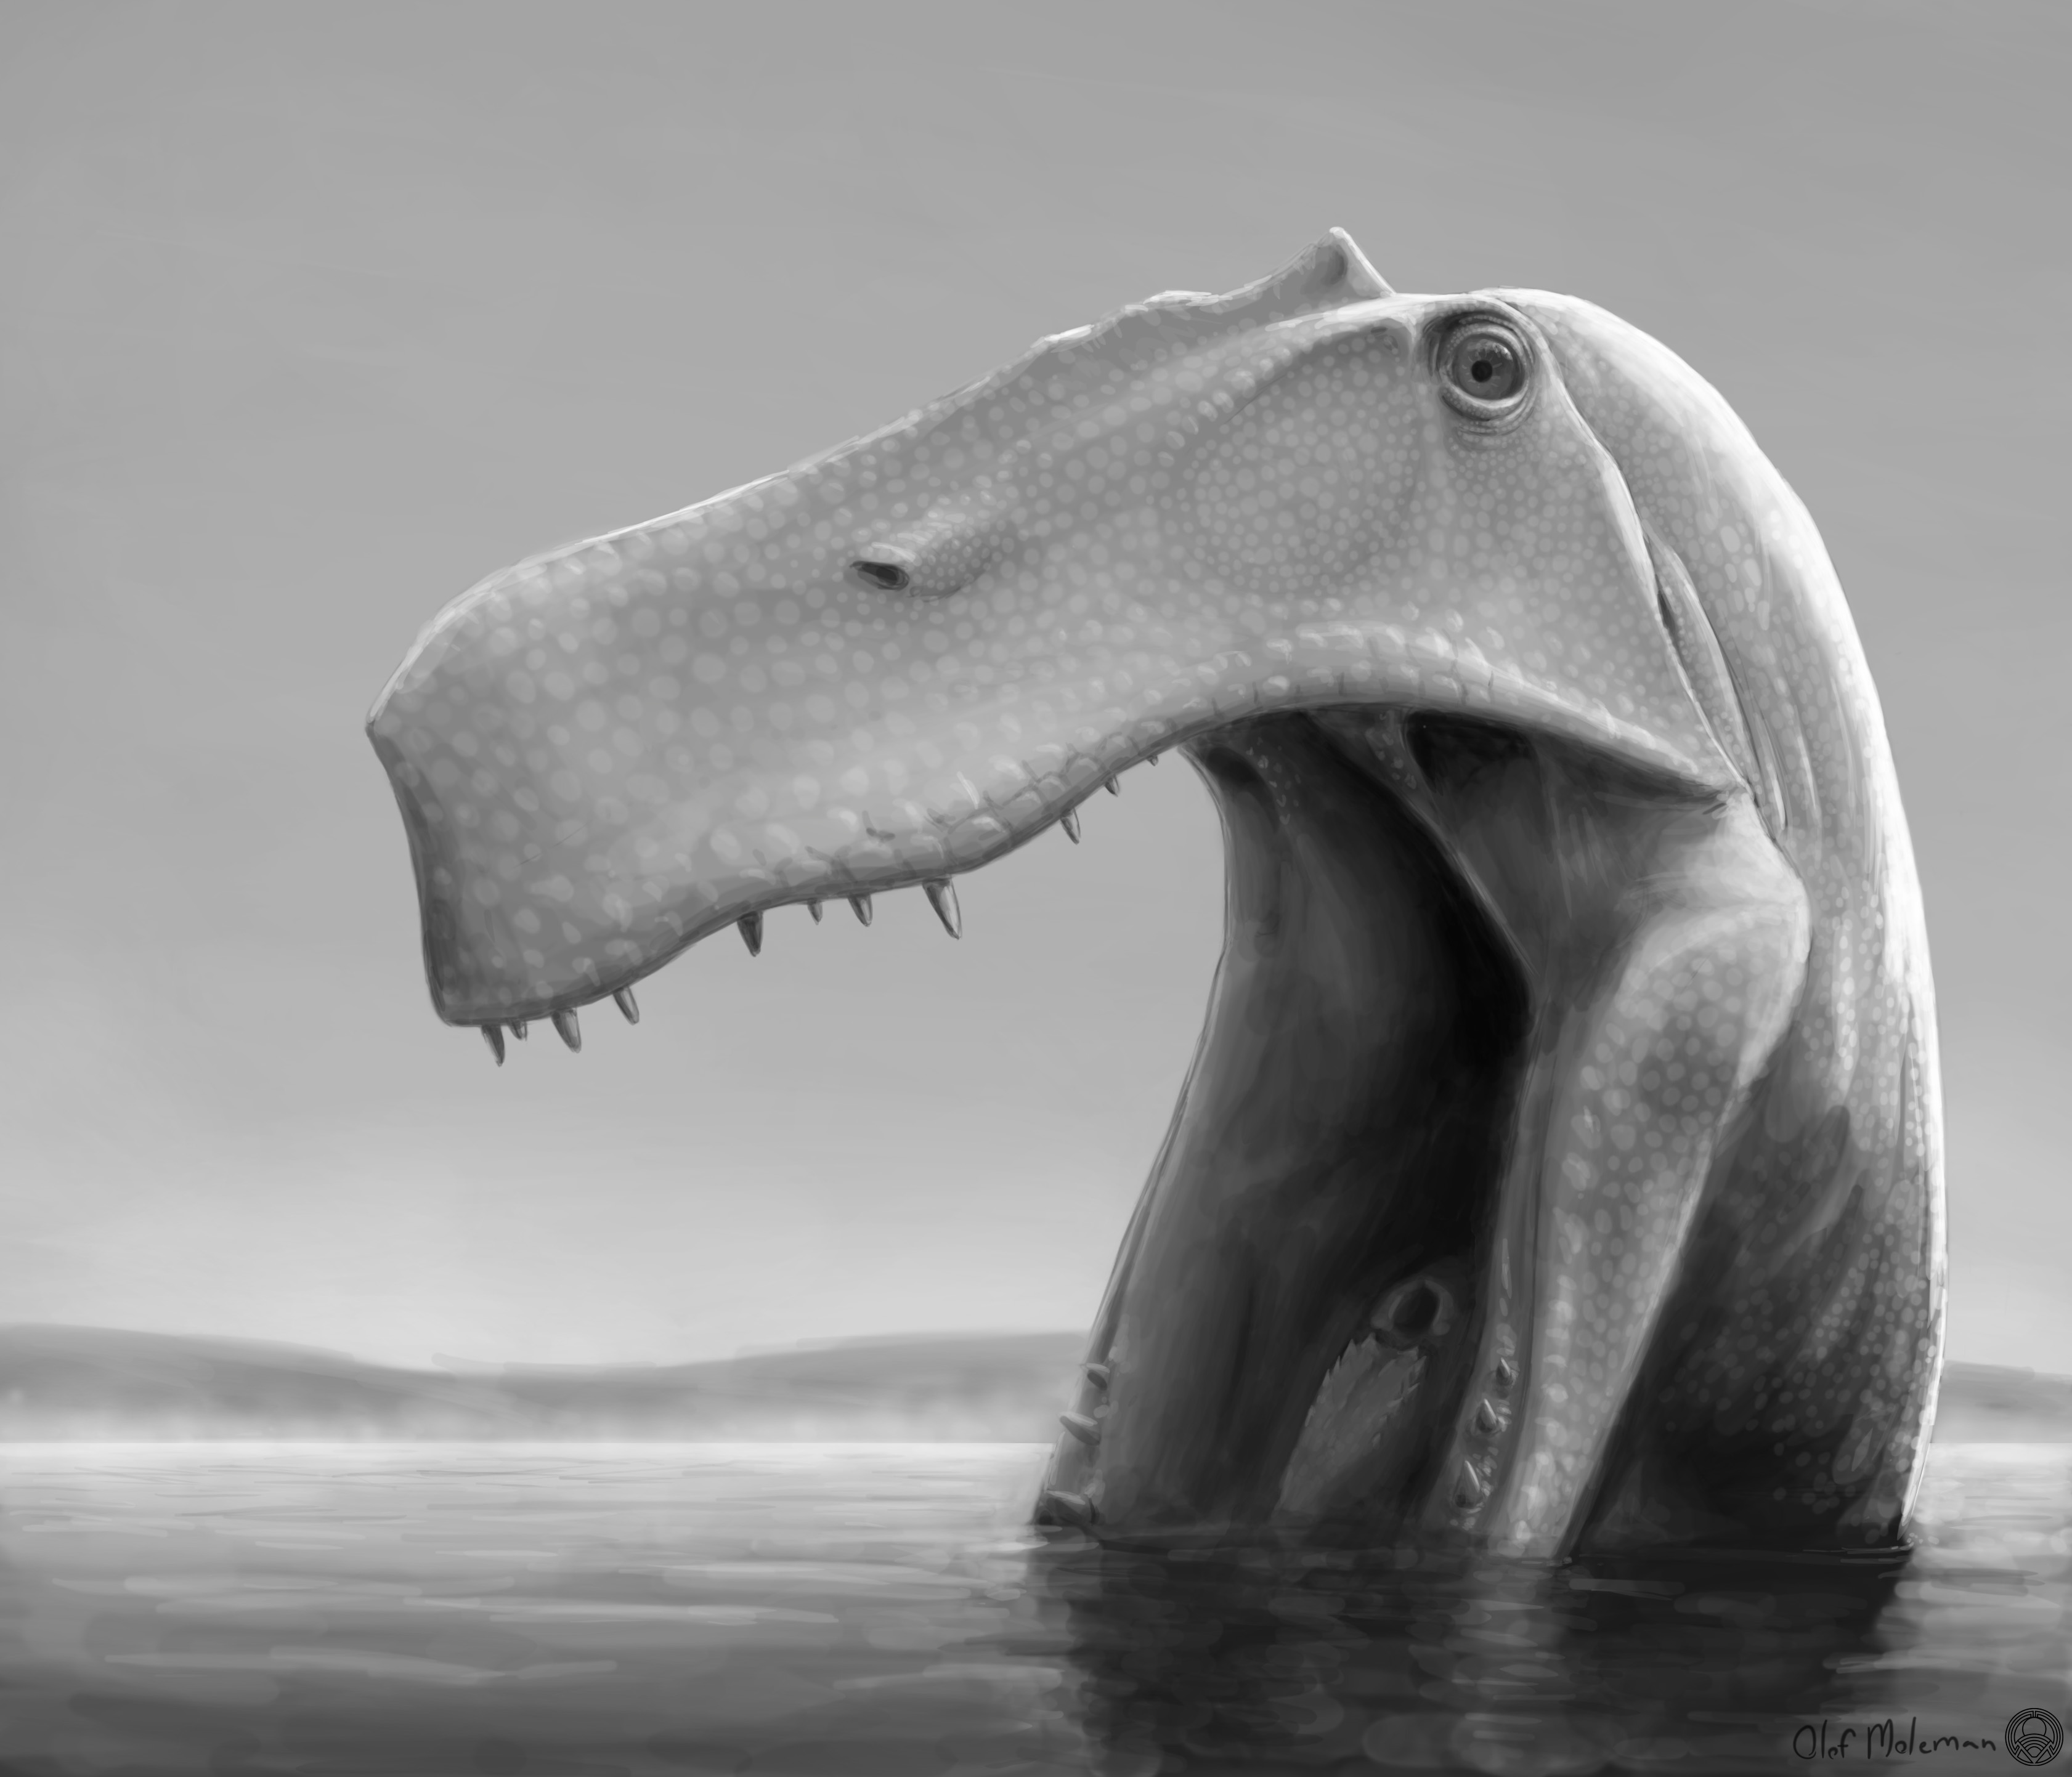 The image shows an illustration of the predatory dinosaur Irritator challengeri